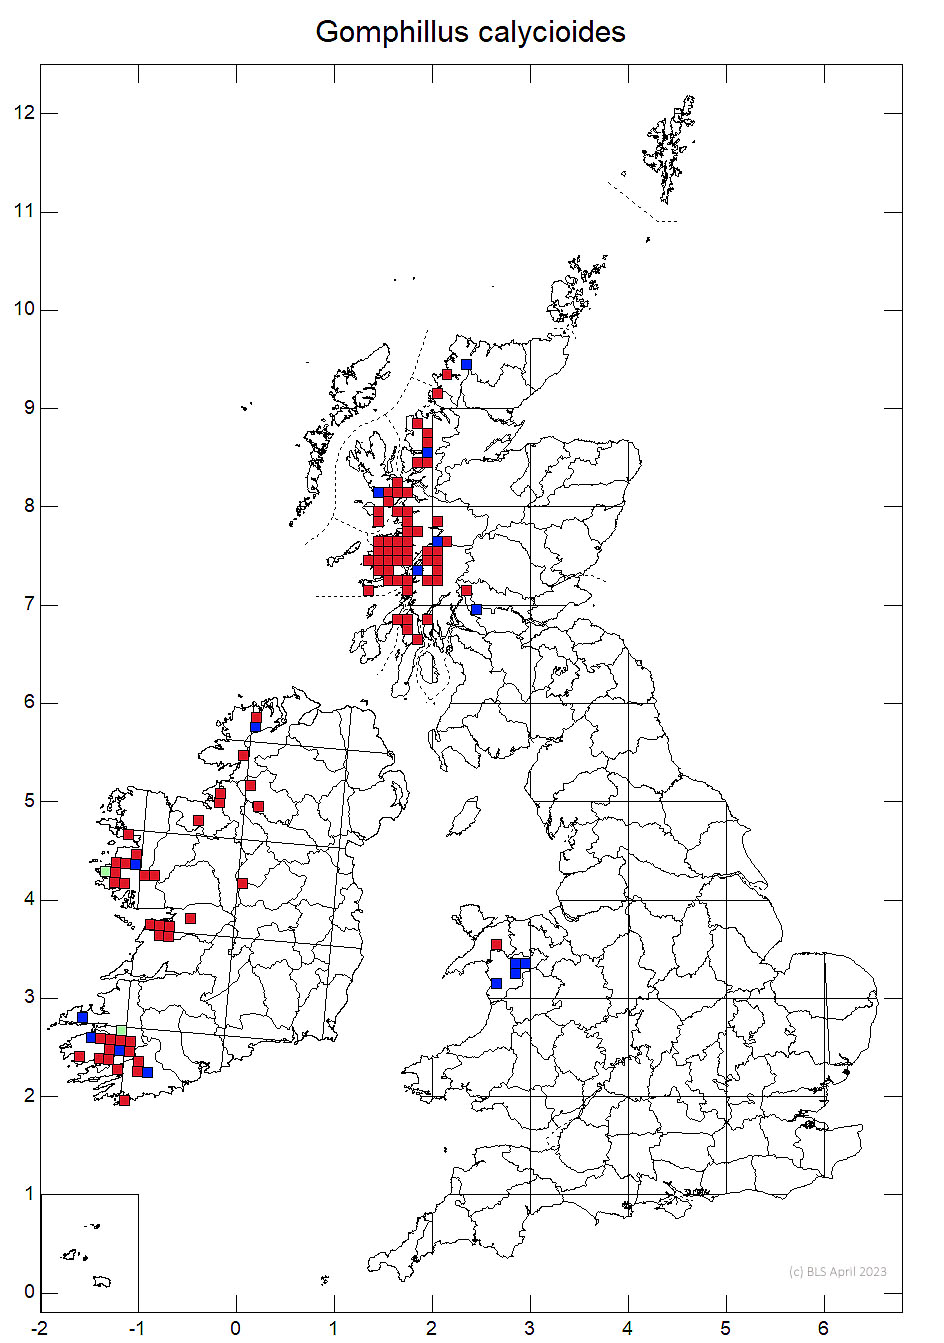 Gomphillus calycioides 10km sq distribution map